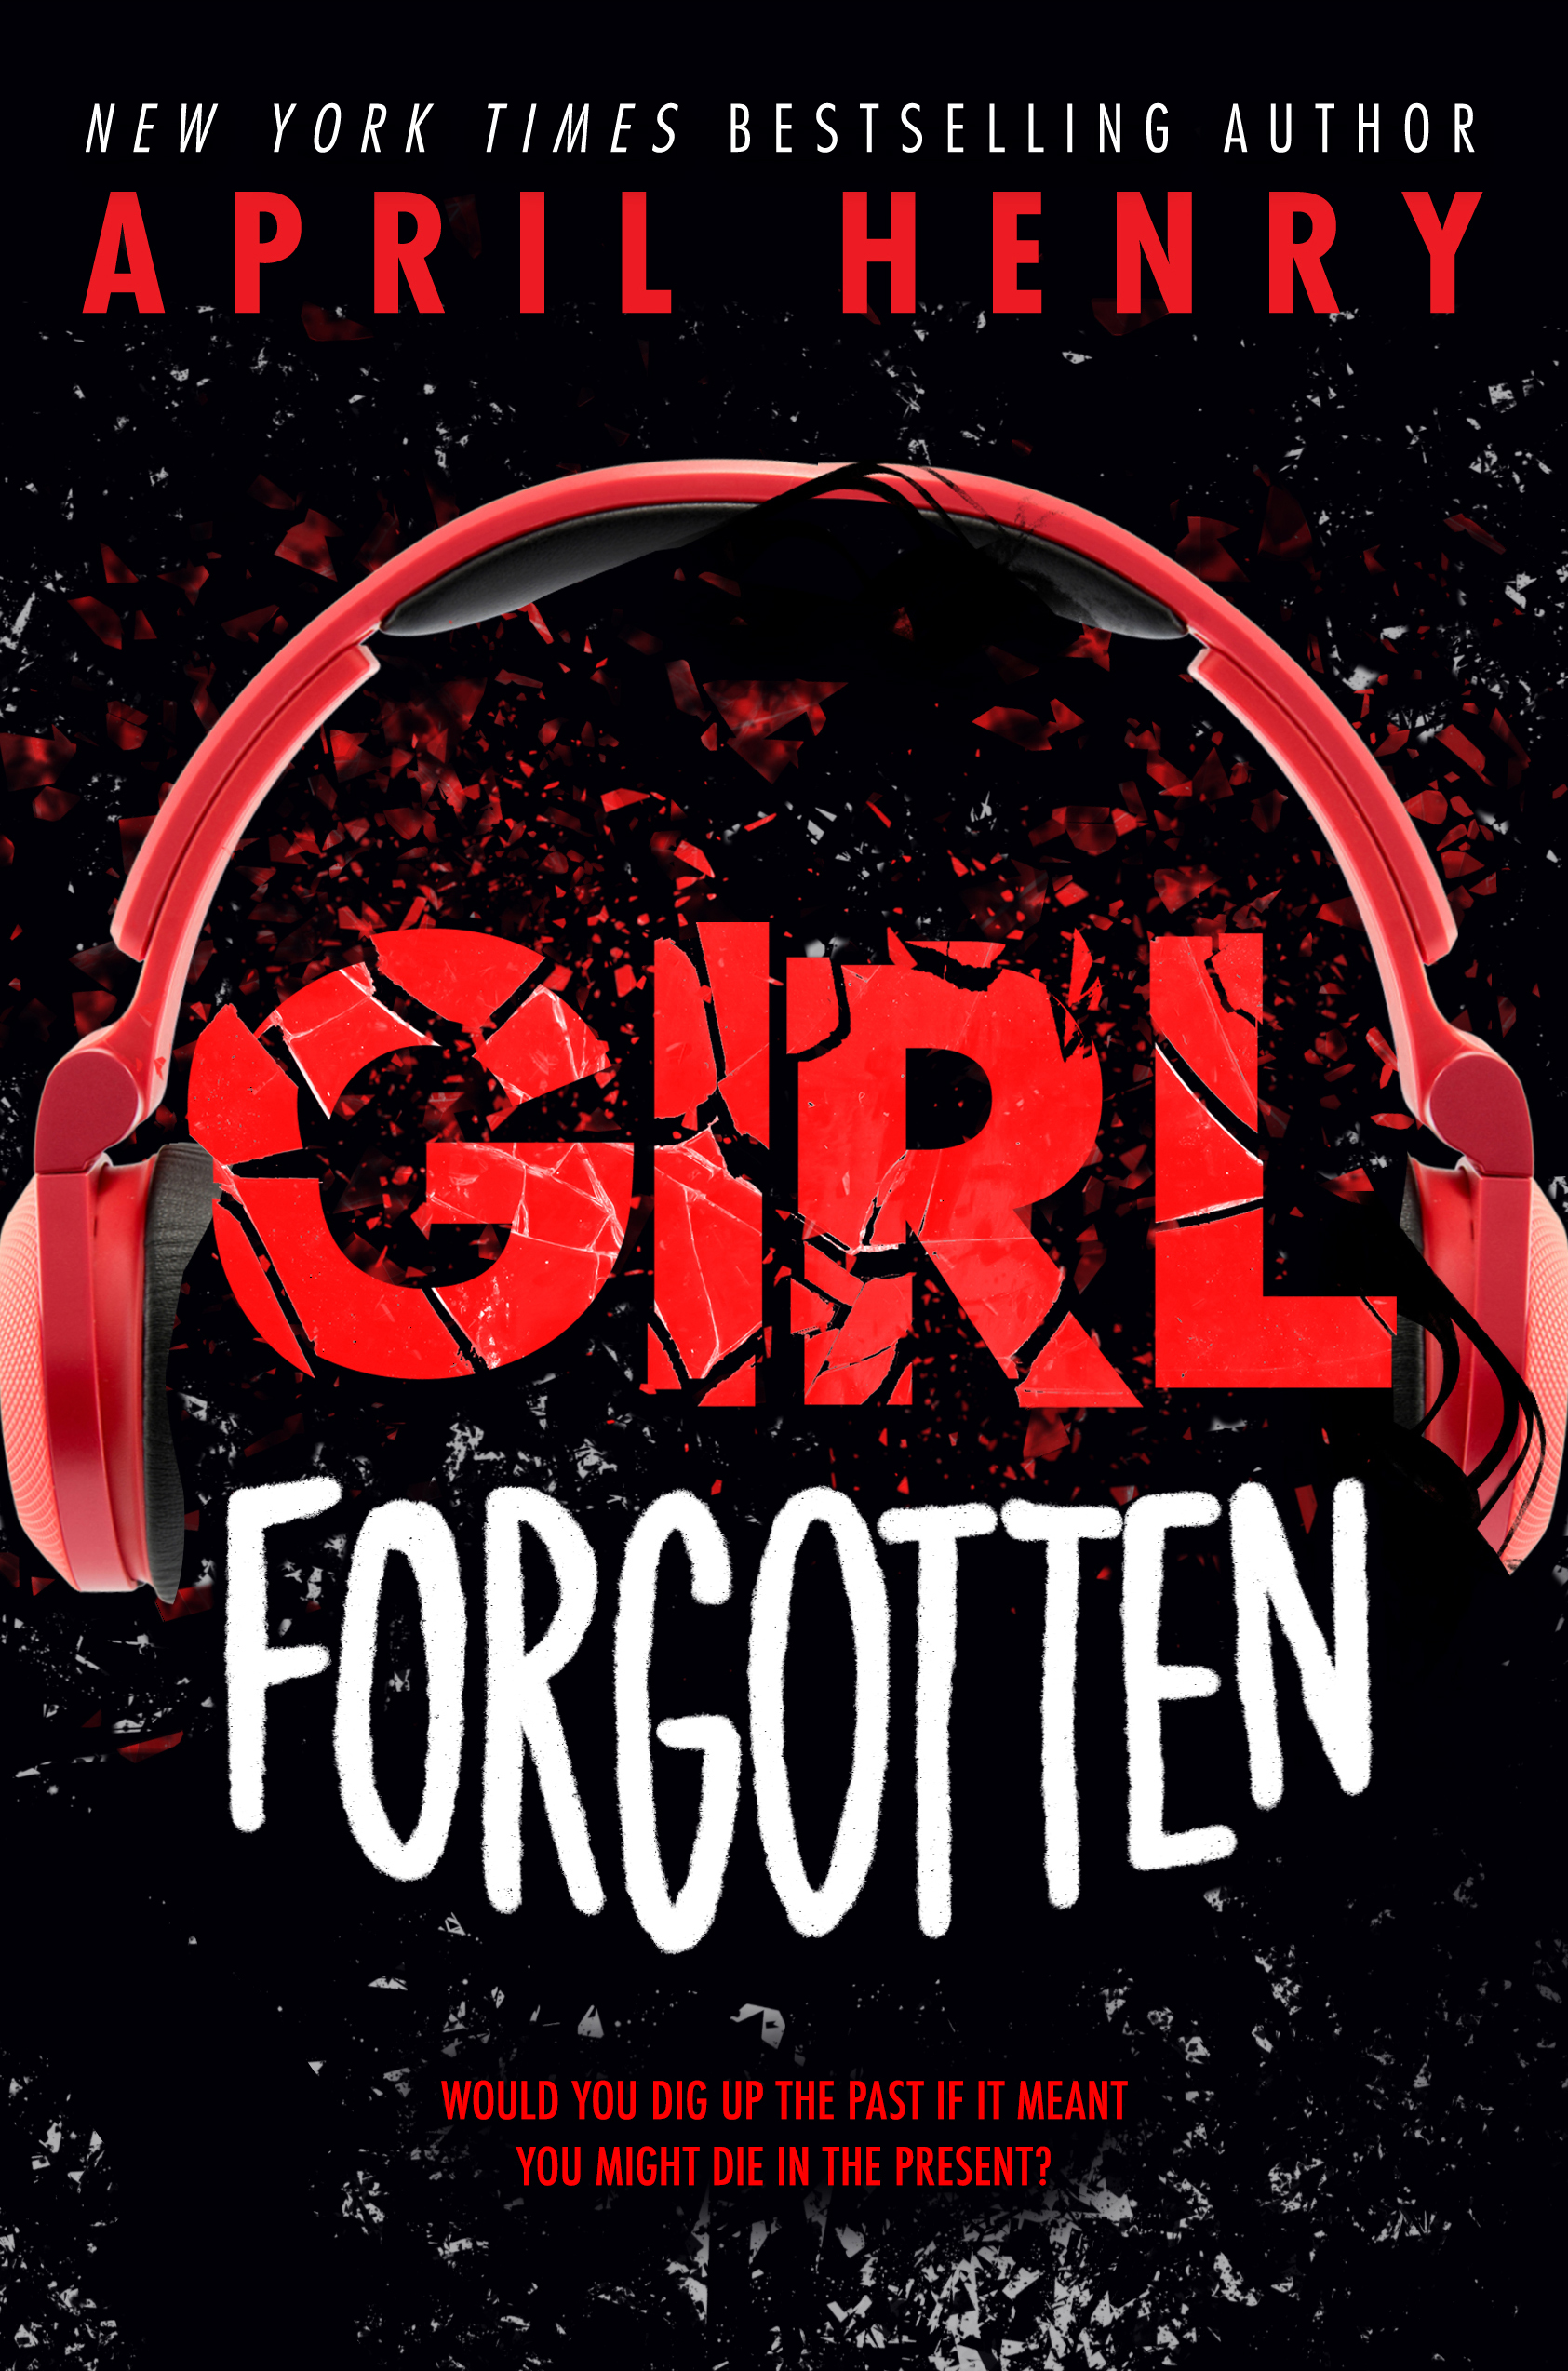 Girl Forgotten by April Henry